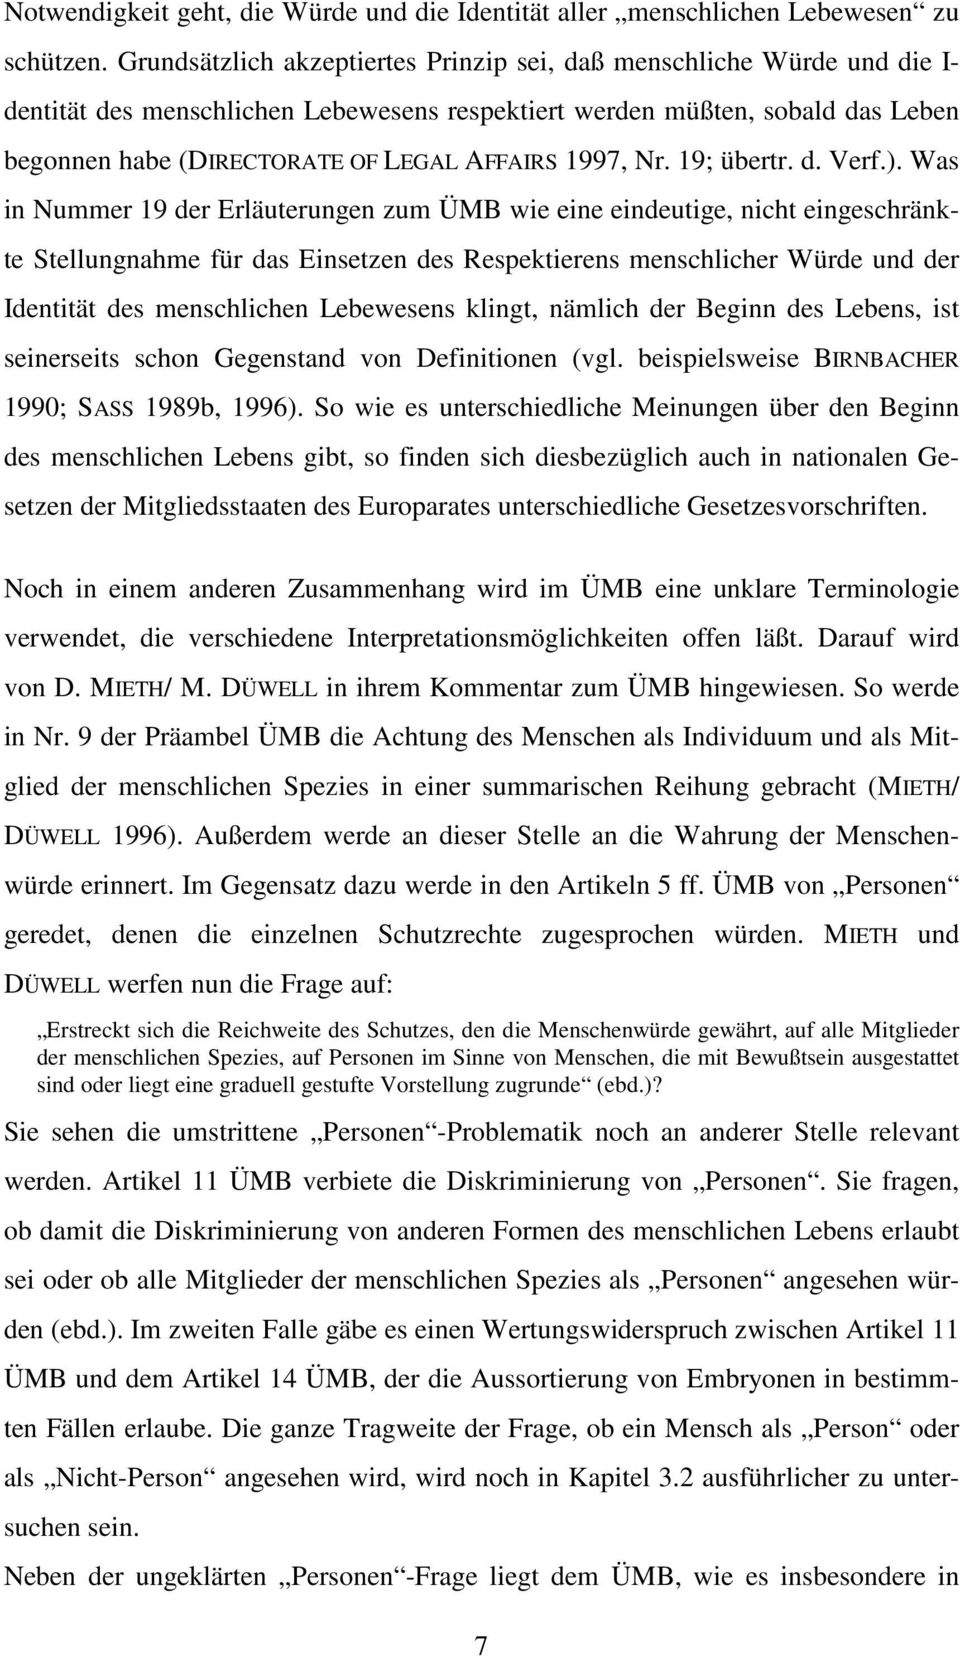 1997, Nr. 19; übertr. d. Verf.).